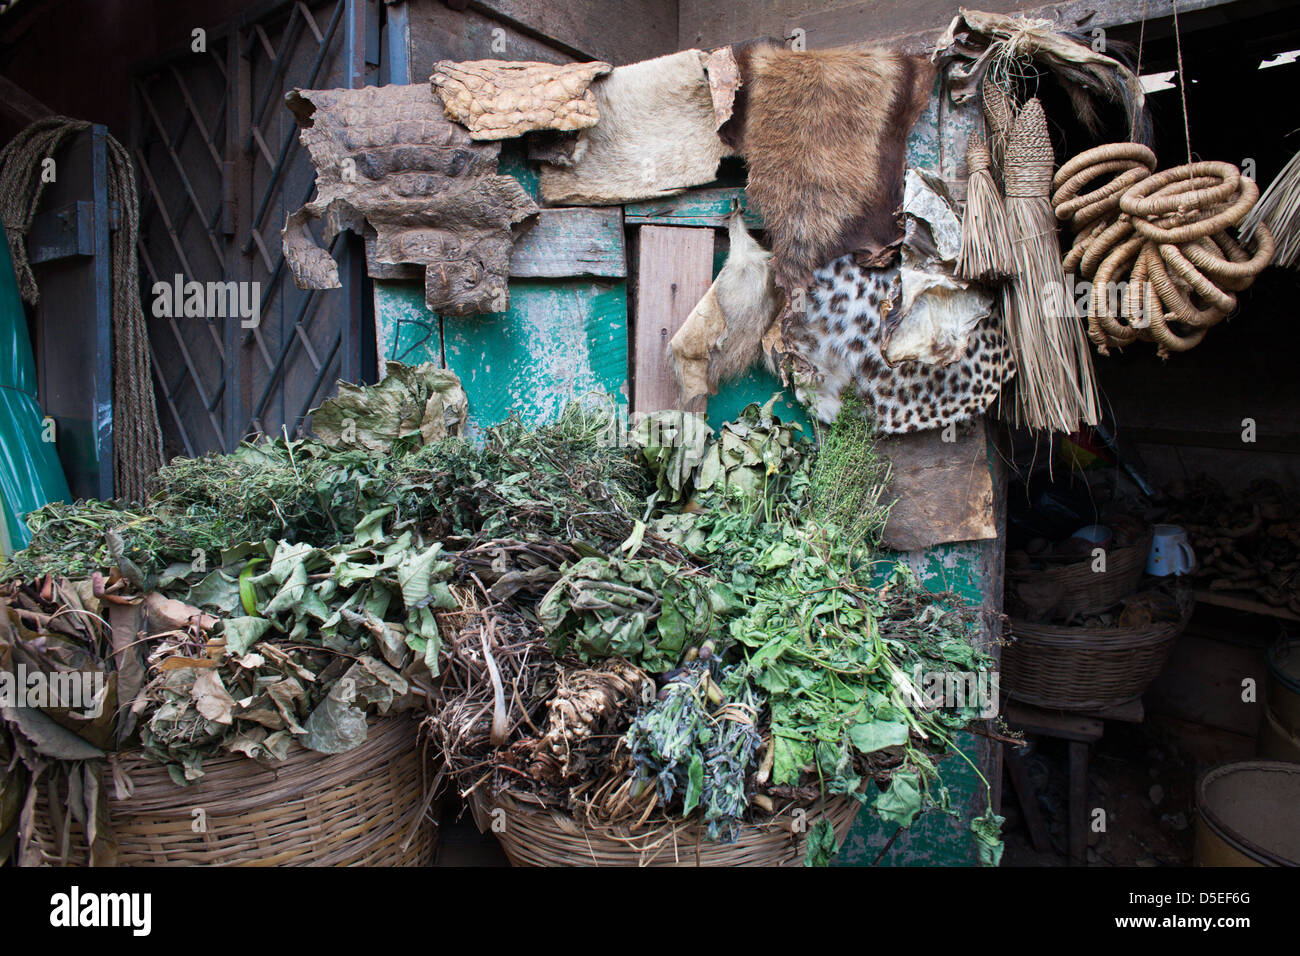 Varie erbe e pelli di animali in vendita nel mercato del legname in Accra, Ghana. Foto Stock